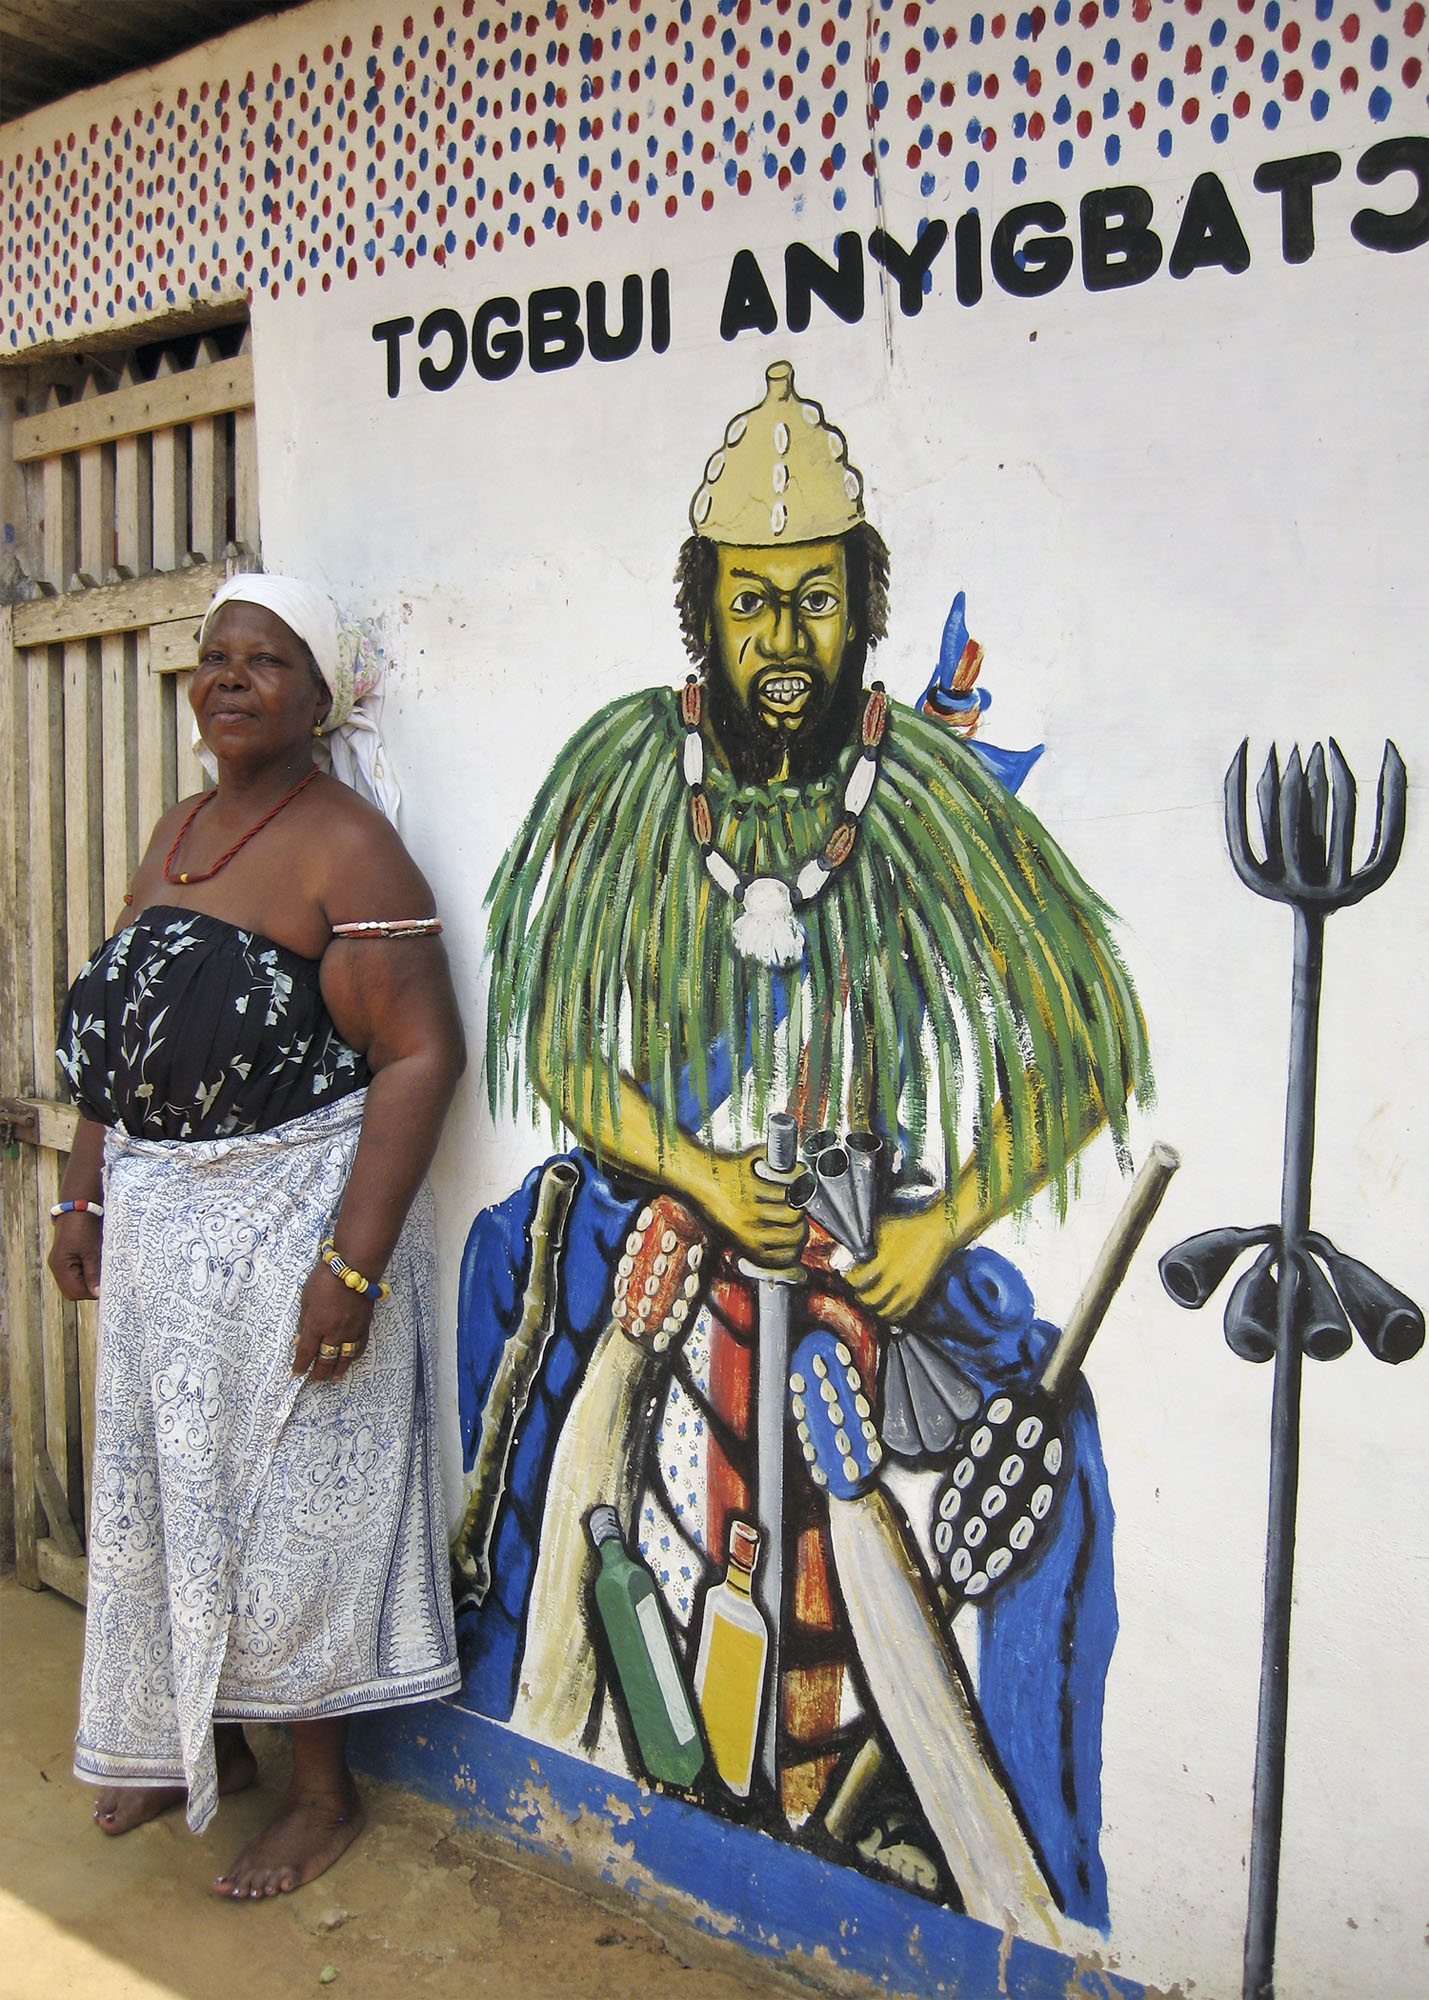 Dashi Kemeh Nkegbe and Togbui Anyigbato shrine, image by Brian Jeffery